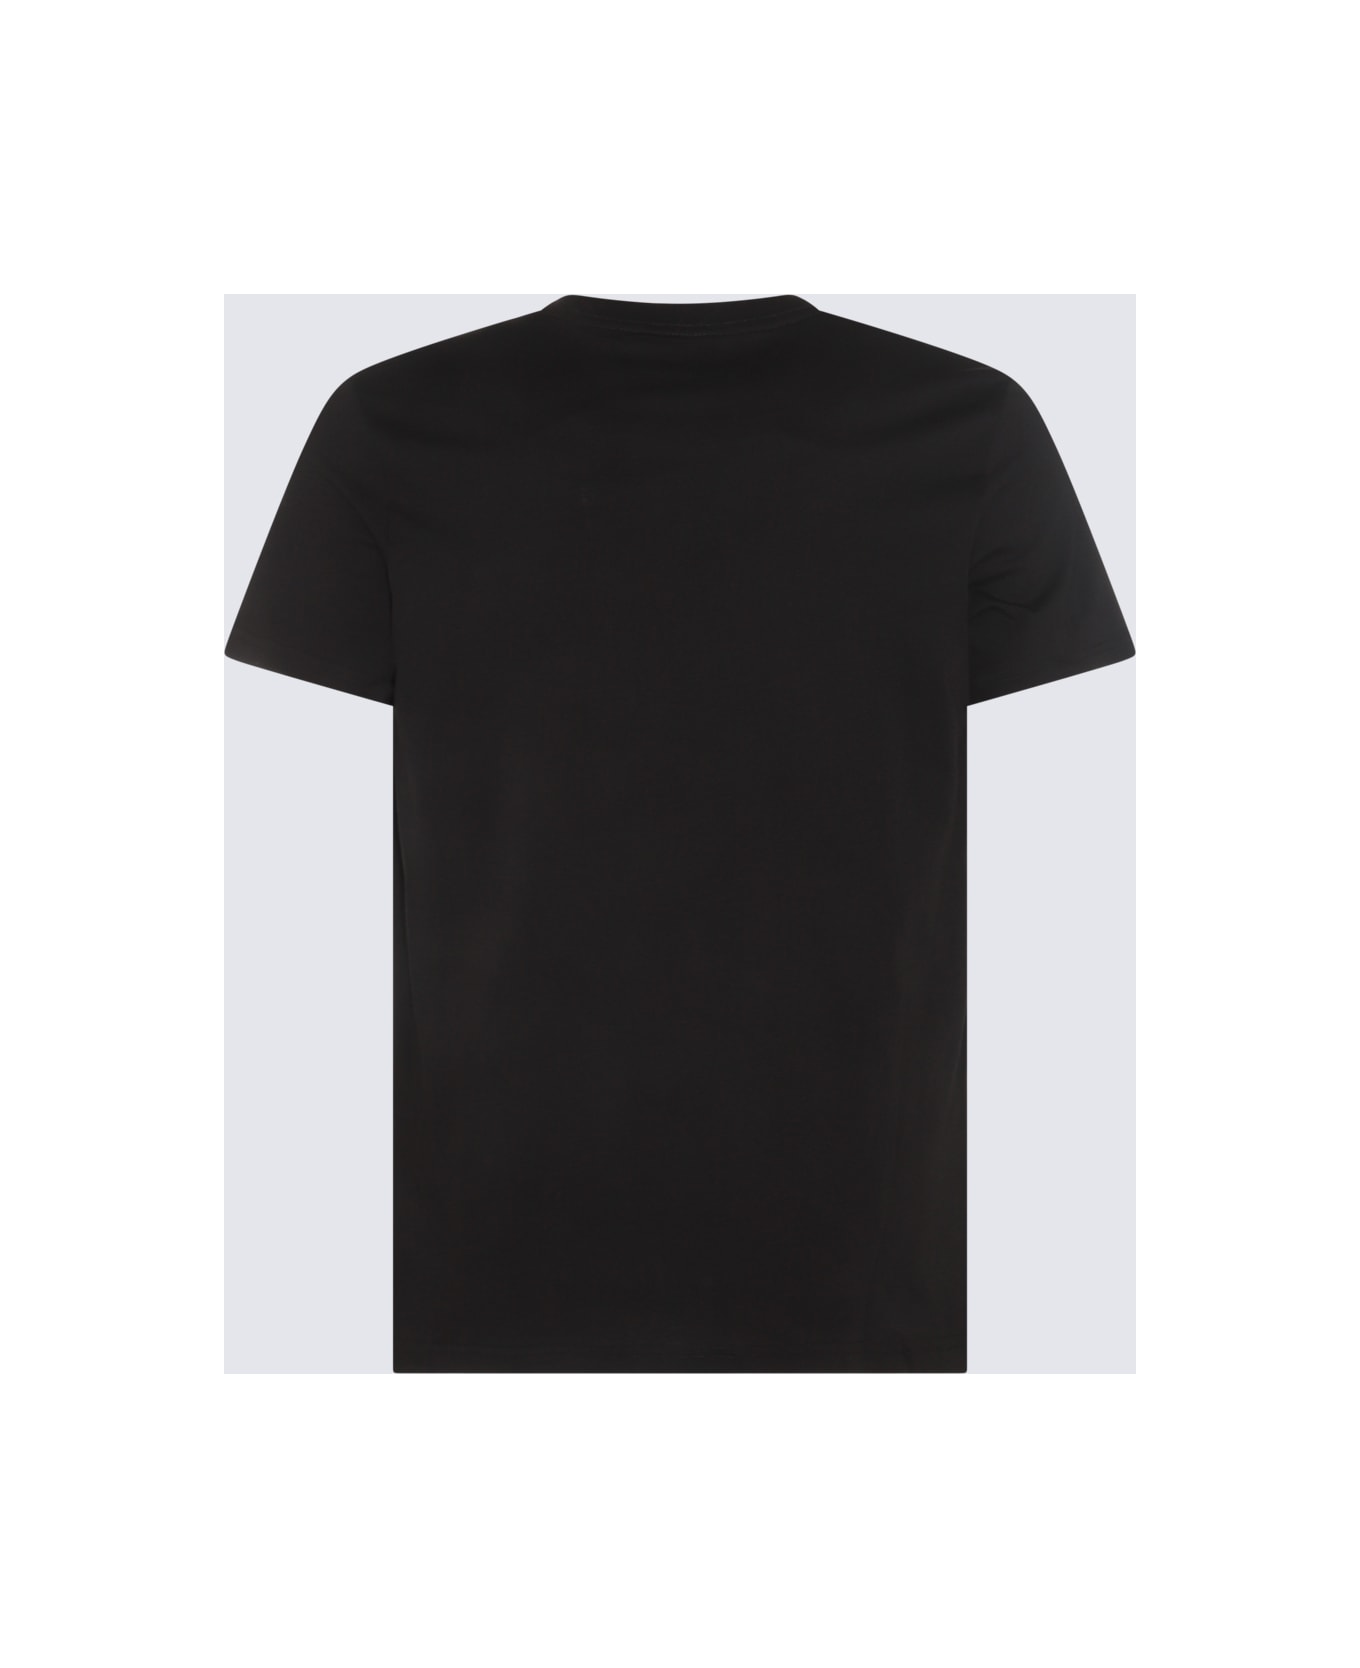 Paul Smith Black Cotton T-shirt - Black シャツ